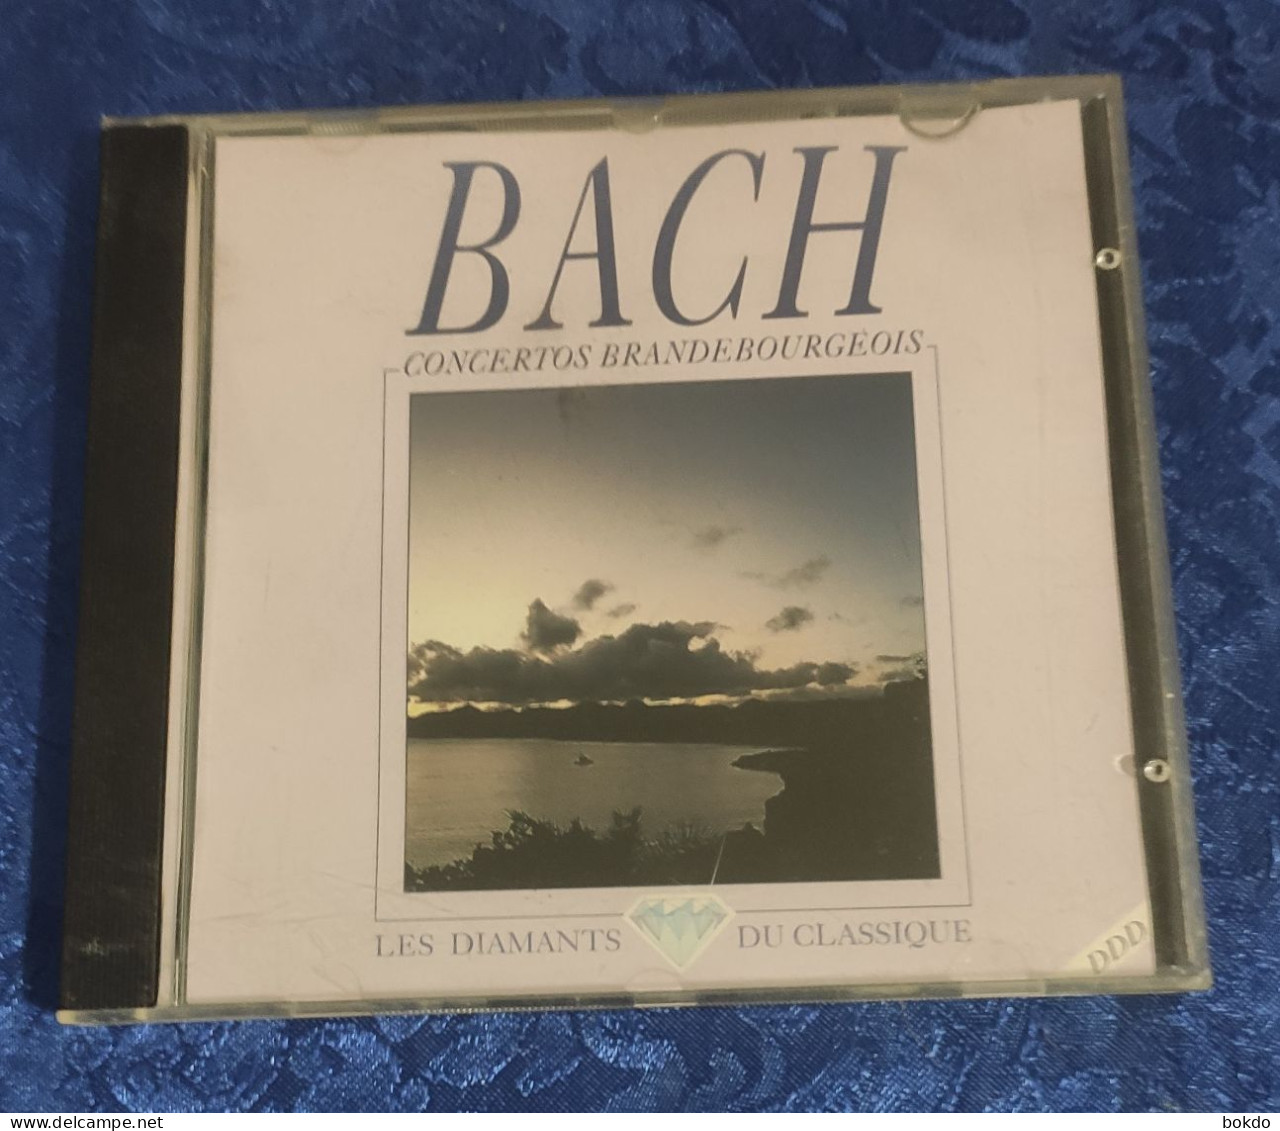 BACH - Concertos Brandebourgeois - Classical